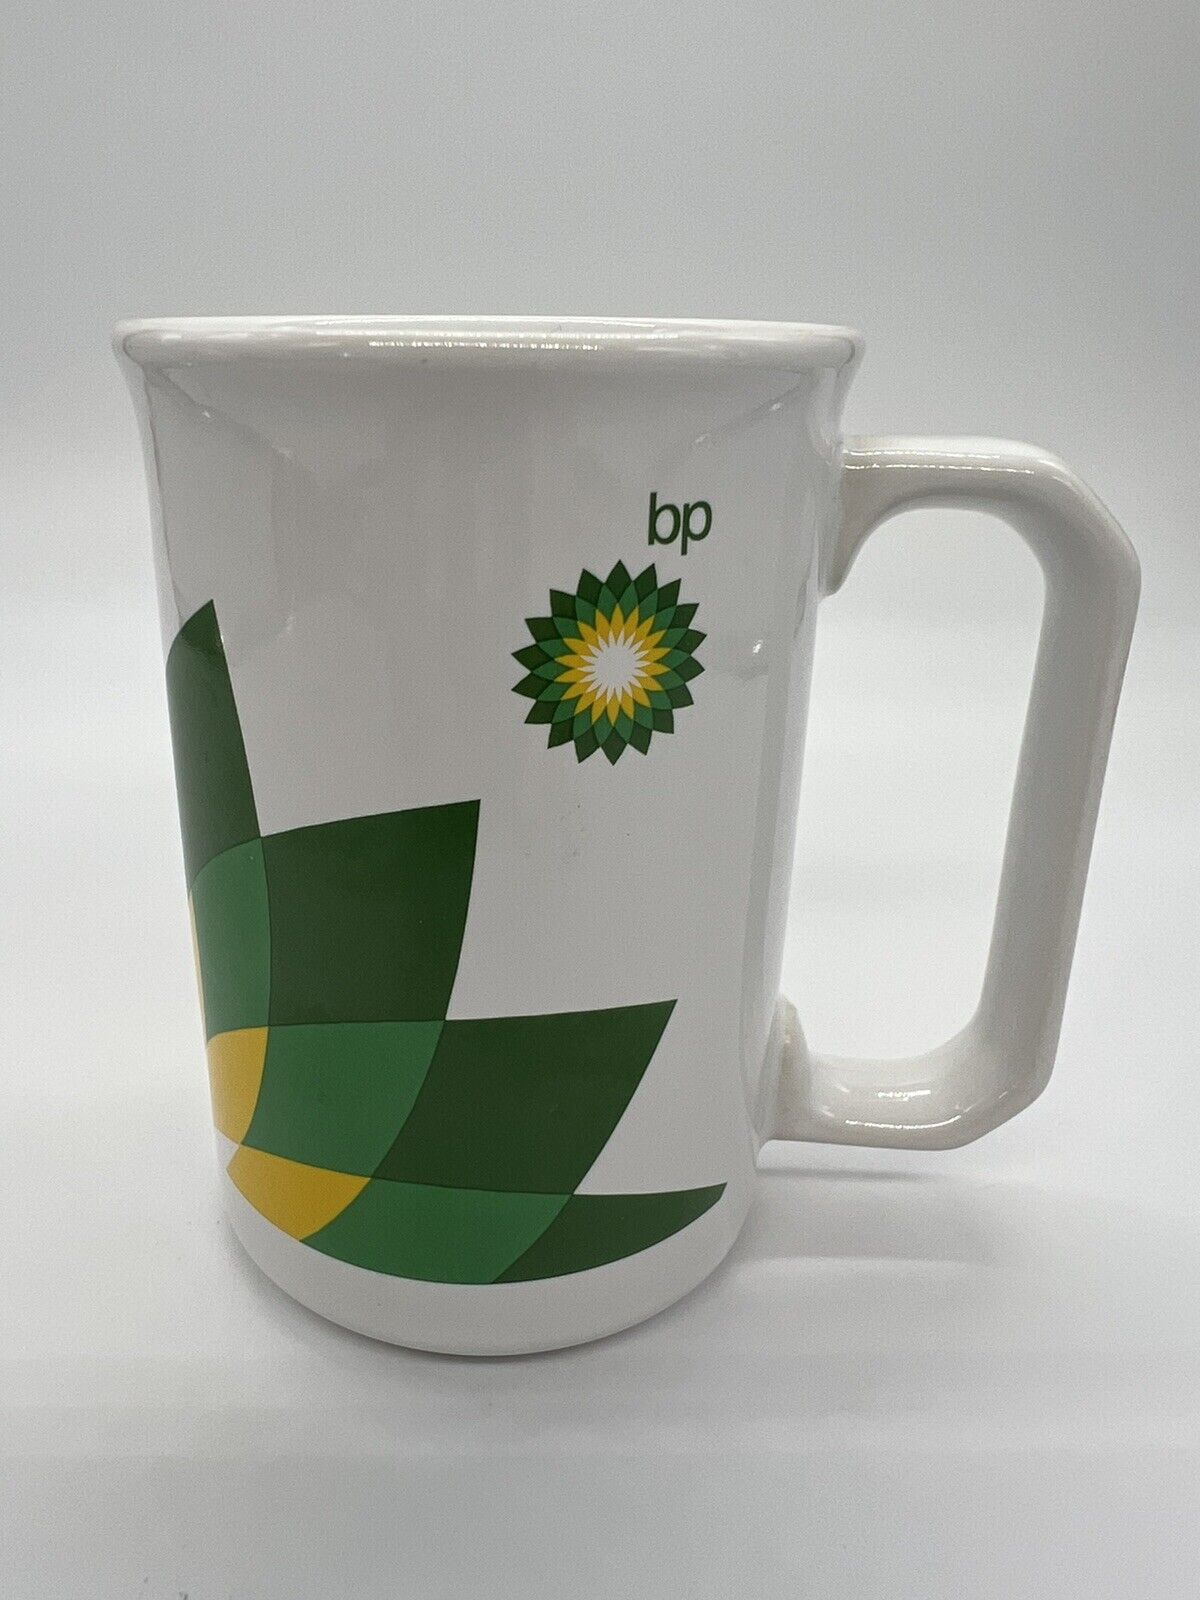 Rare Vintage BP Oil Coffee Mug Cup Made In England